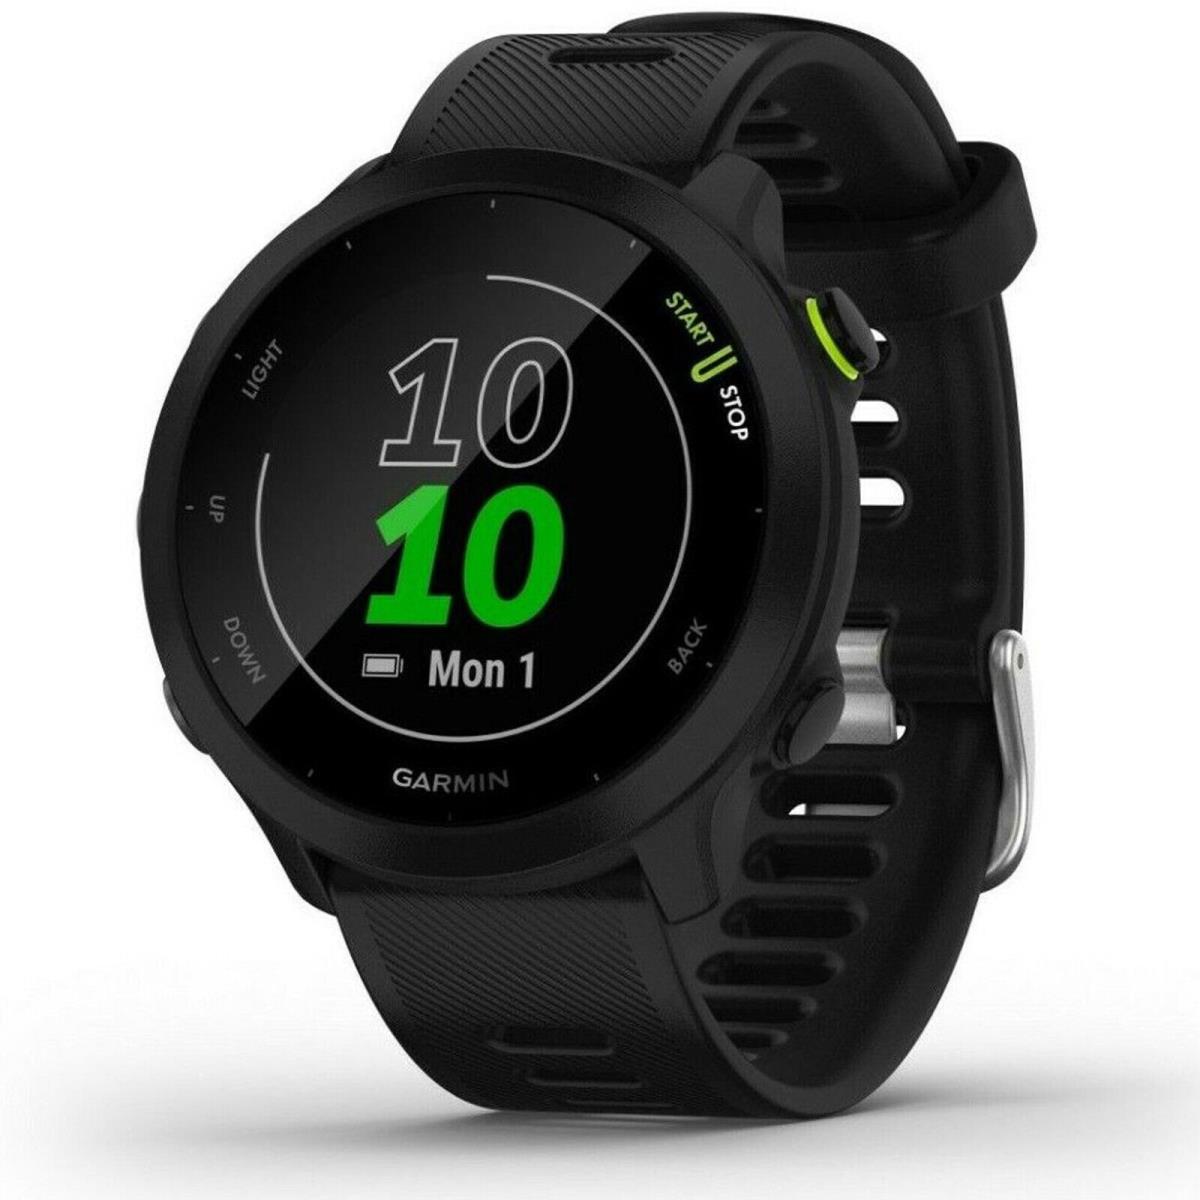 Garmin 010-02562-00 Forerunner 55 Black Gps Smartwatch Fitness Running Watch